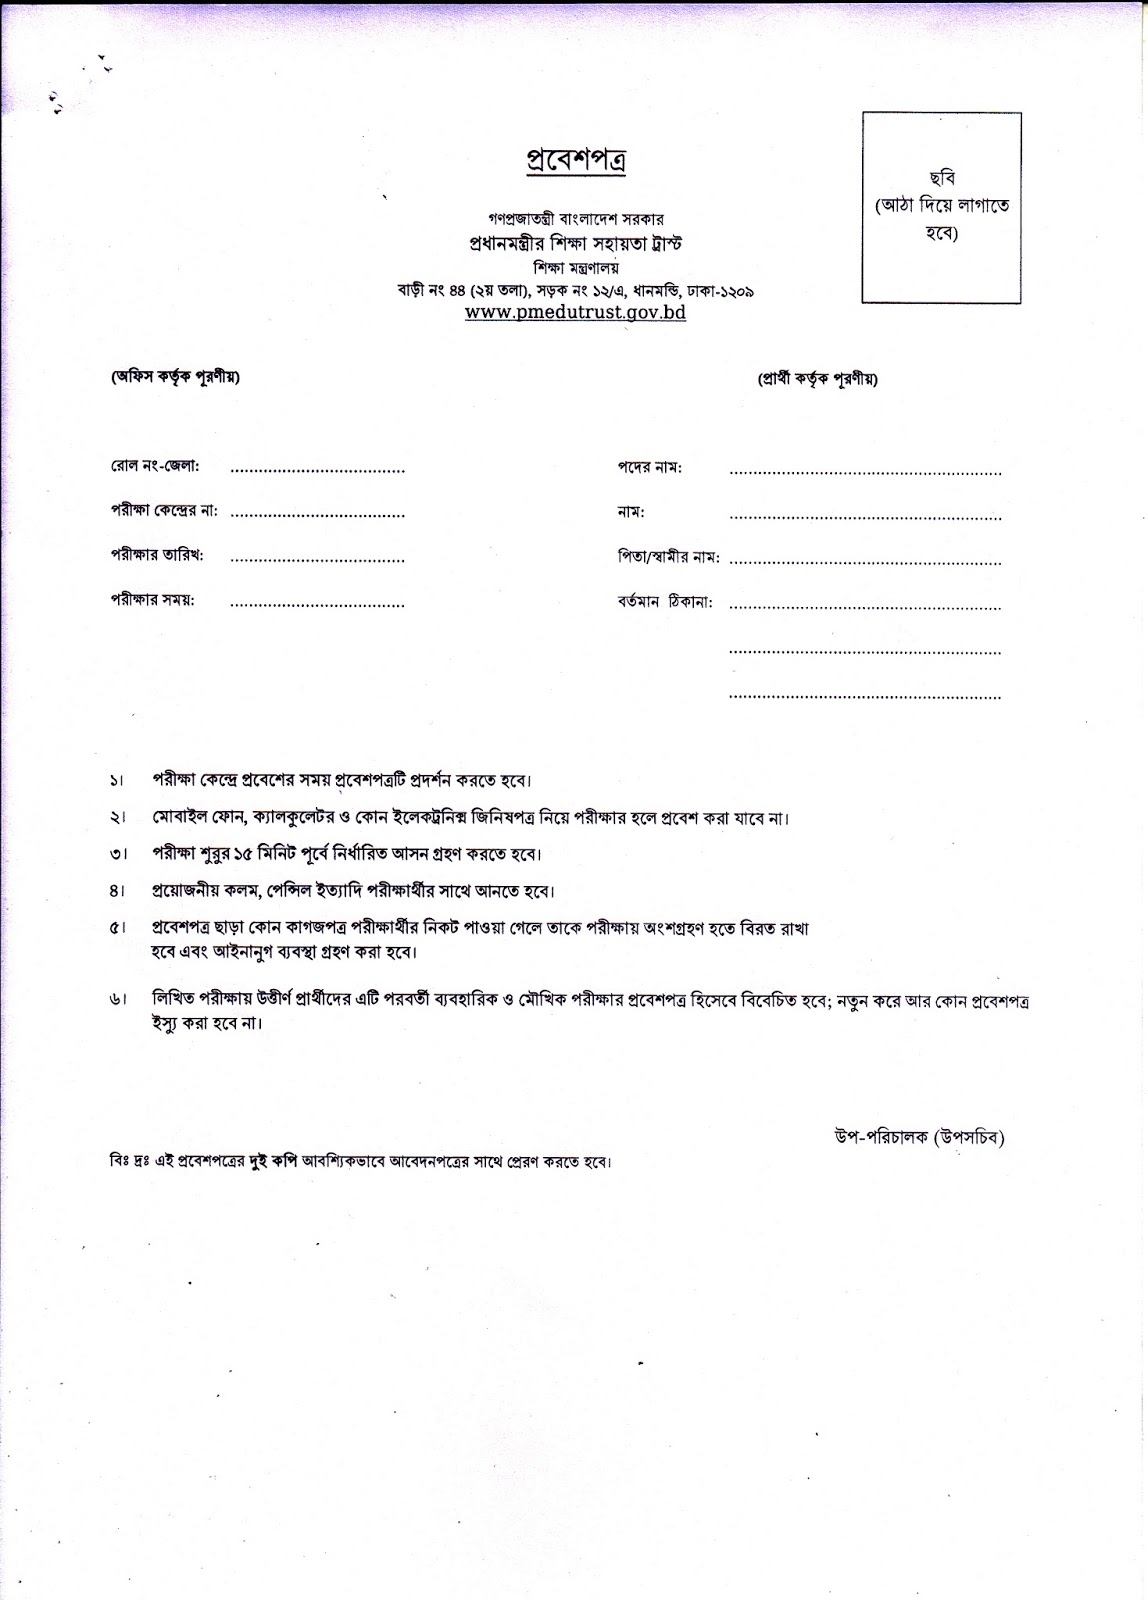 Prime Minister's Education Assistance Trust Job Admit Card Form